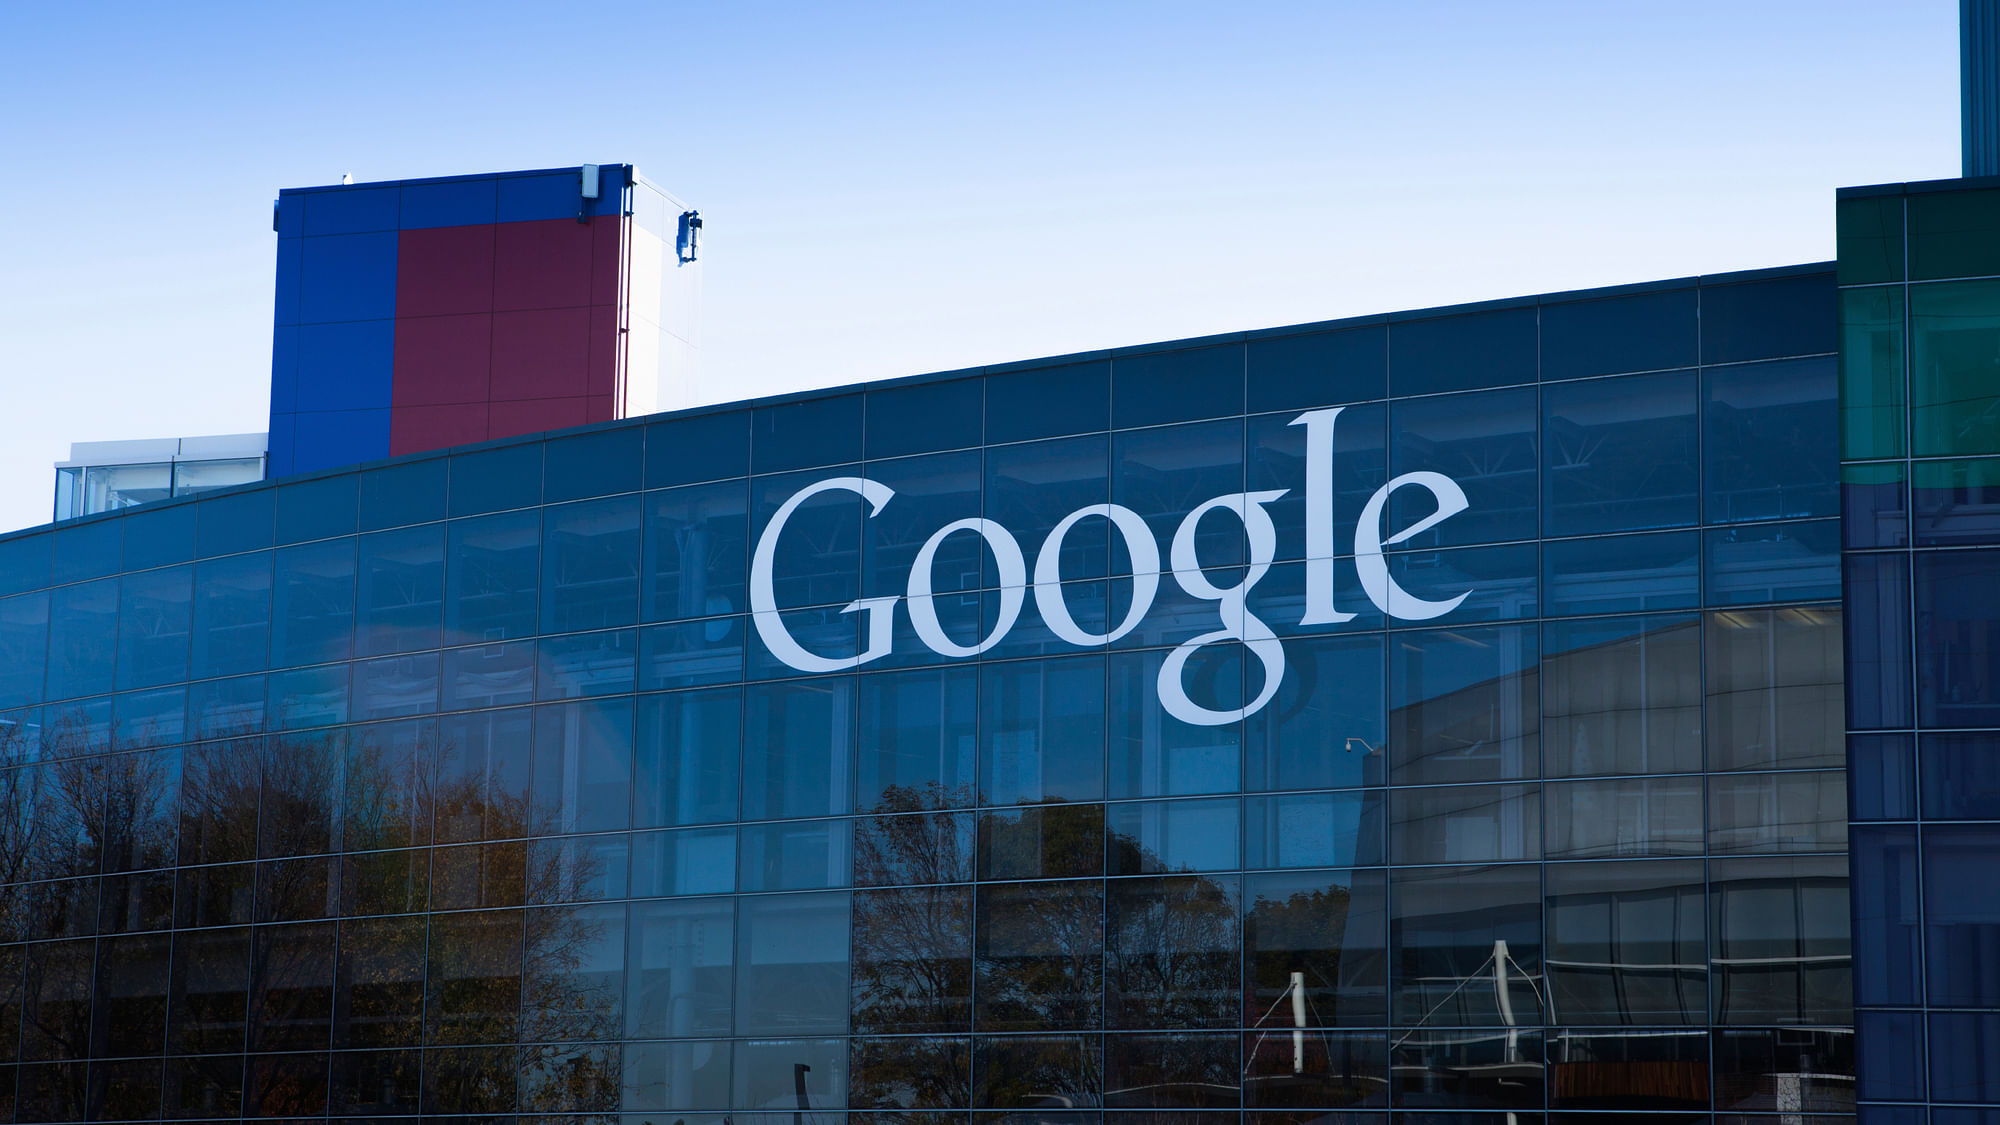 Google headquarters in California. (Photo: iStock)